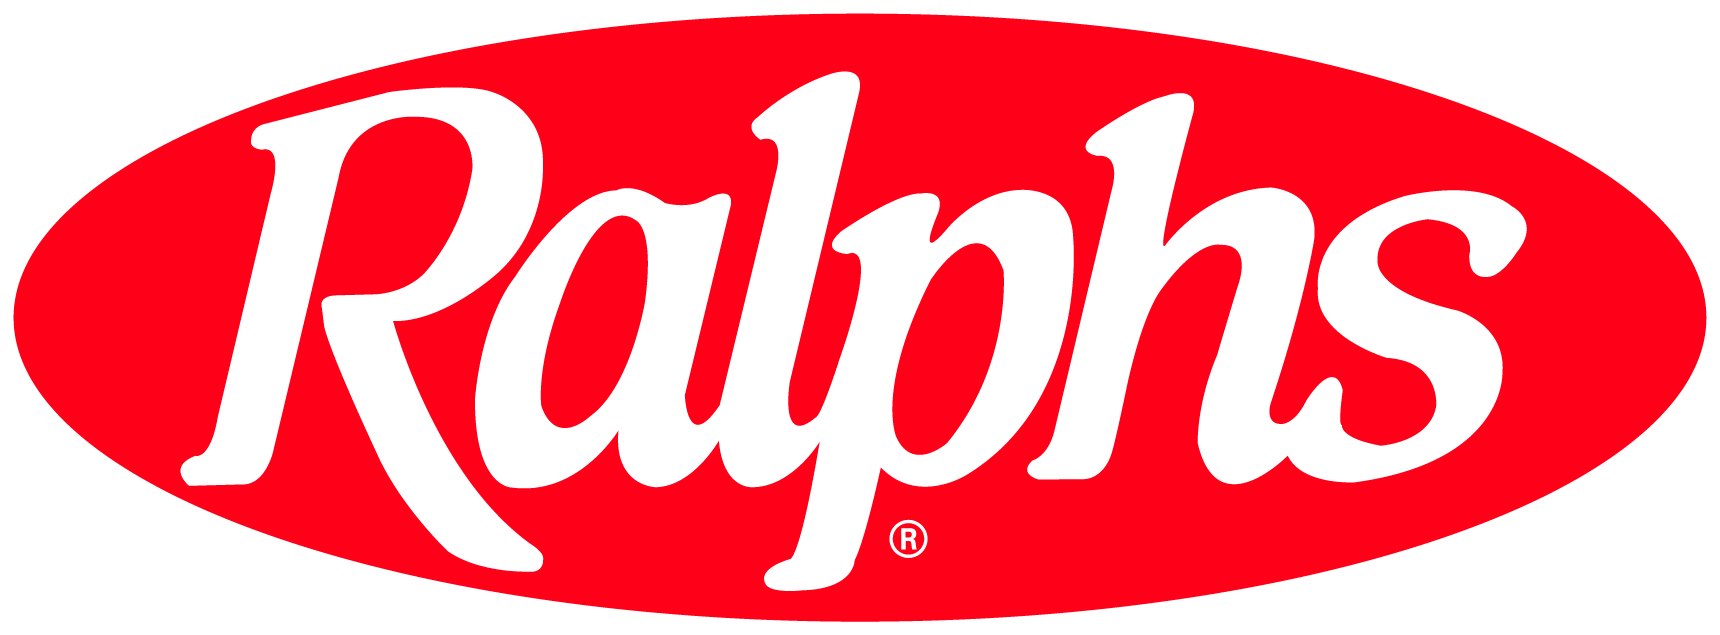 Ralphs_logo